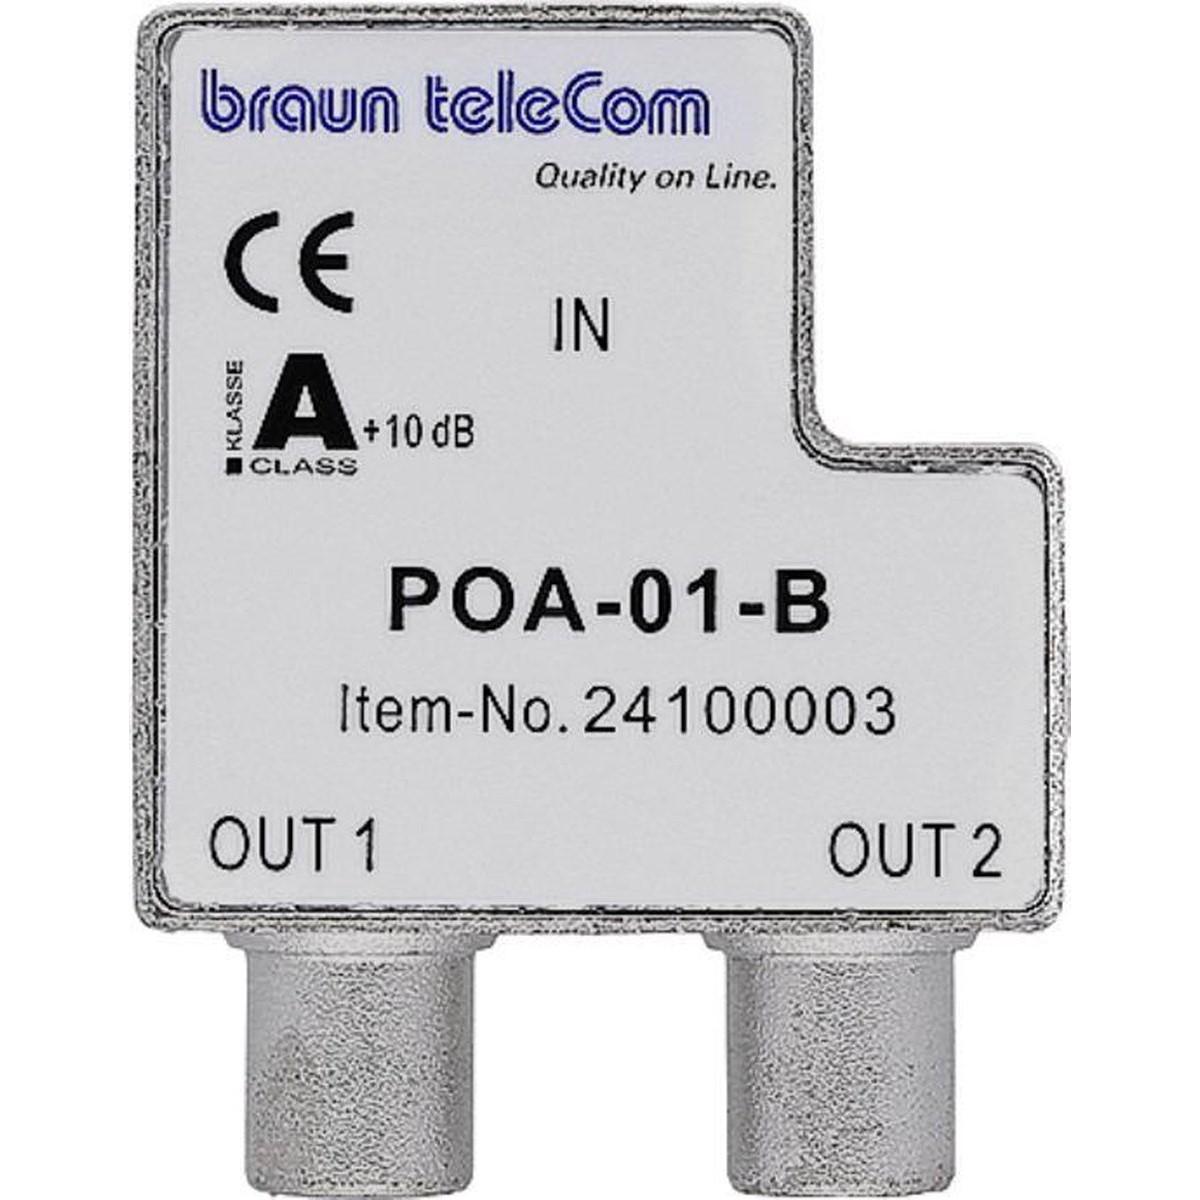 BTV 2 GHz verdeler 2xIEC/TV (POA 01-B) - Braun